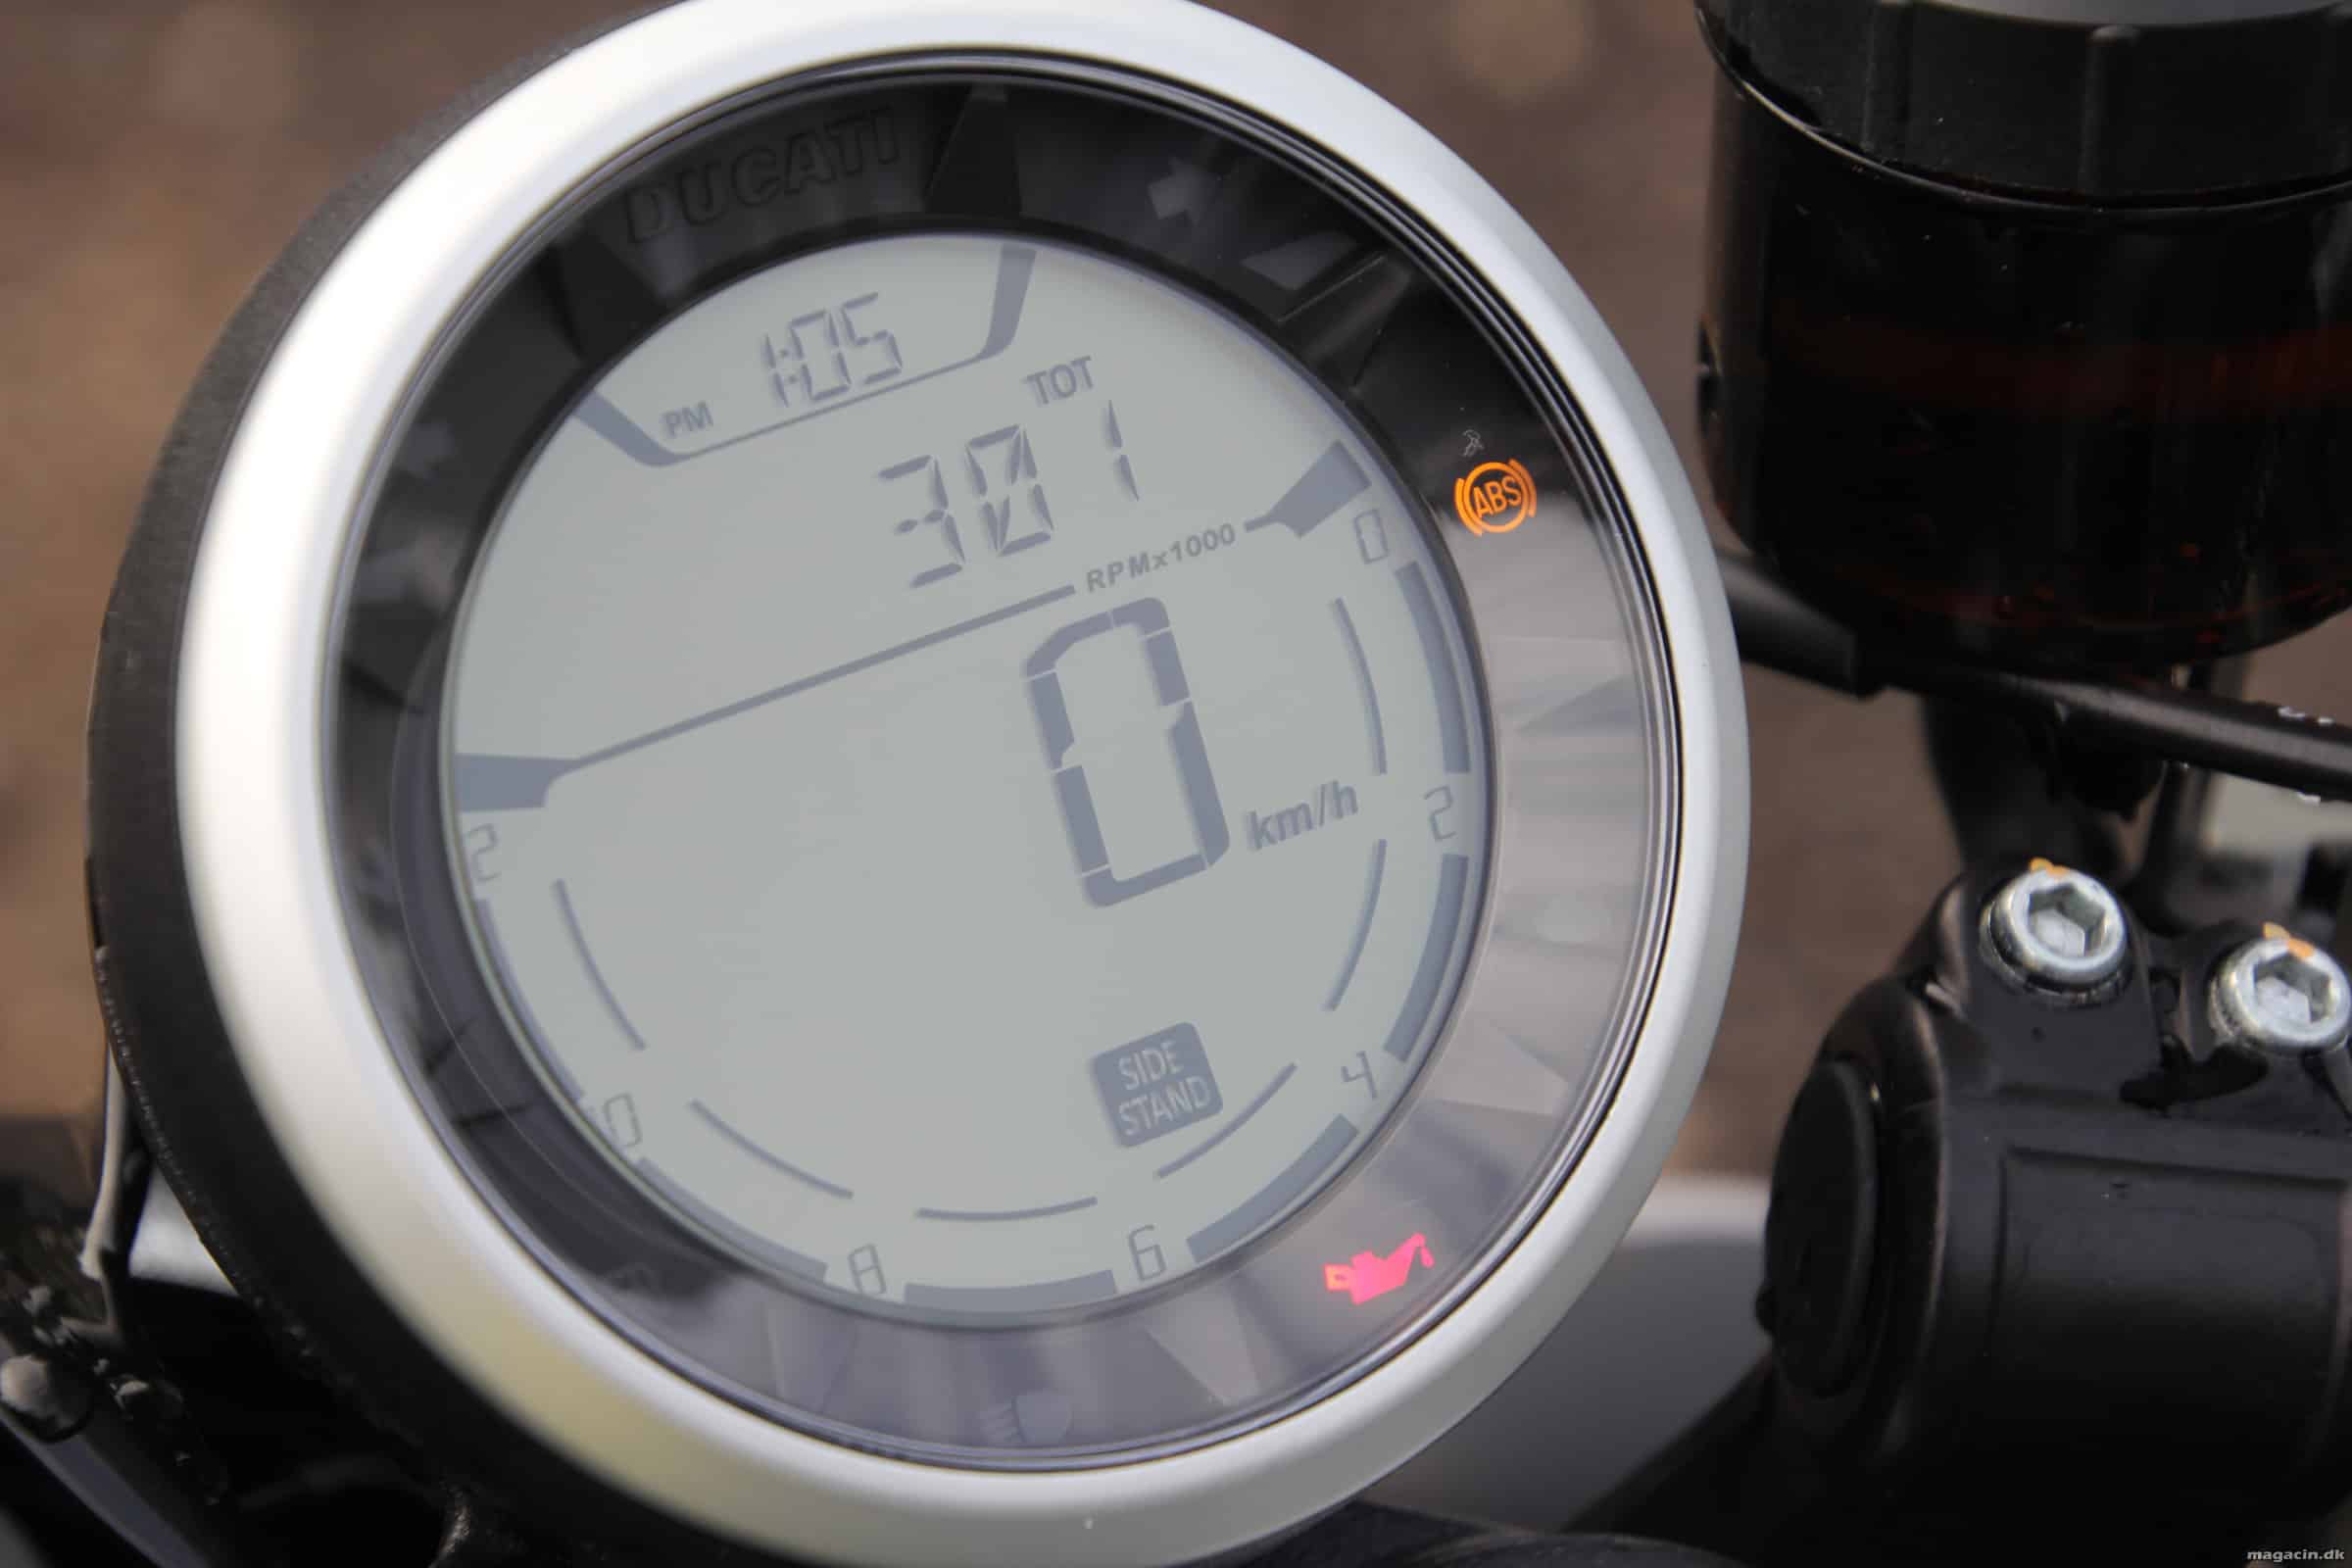 Test: 2019 Ducati Scrambler Café Racer – En livstilsmotorcykel